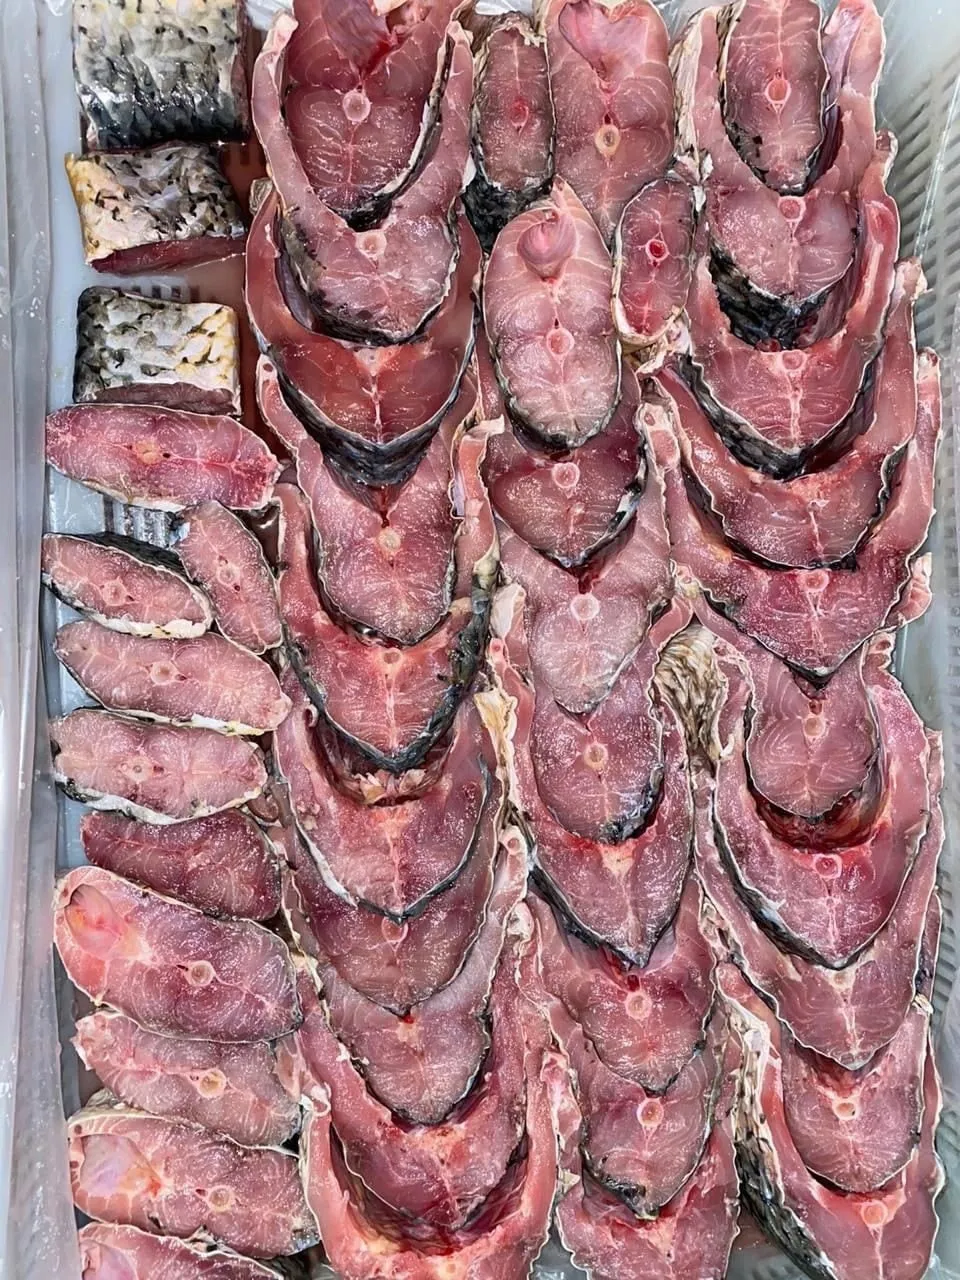 филе,тушка,стейки из сазана каспийского в Ростове-на-Дону